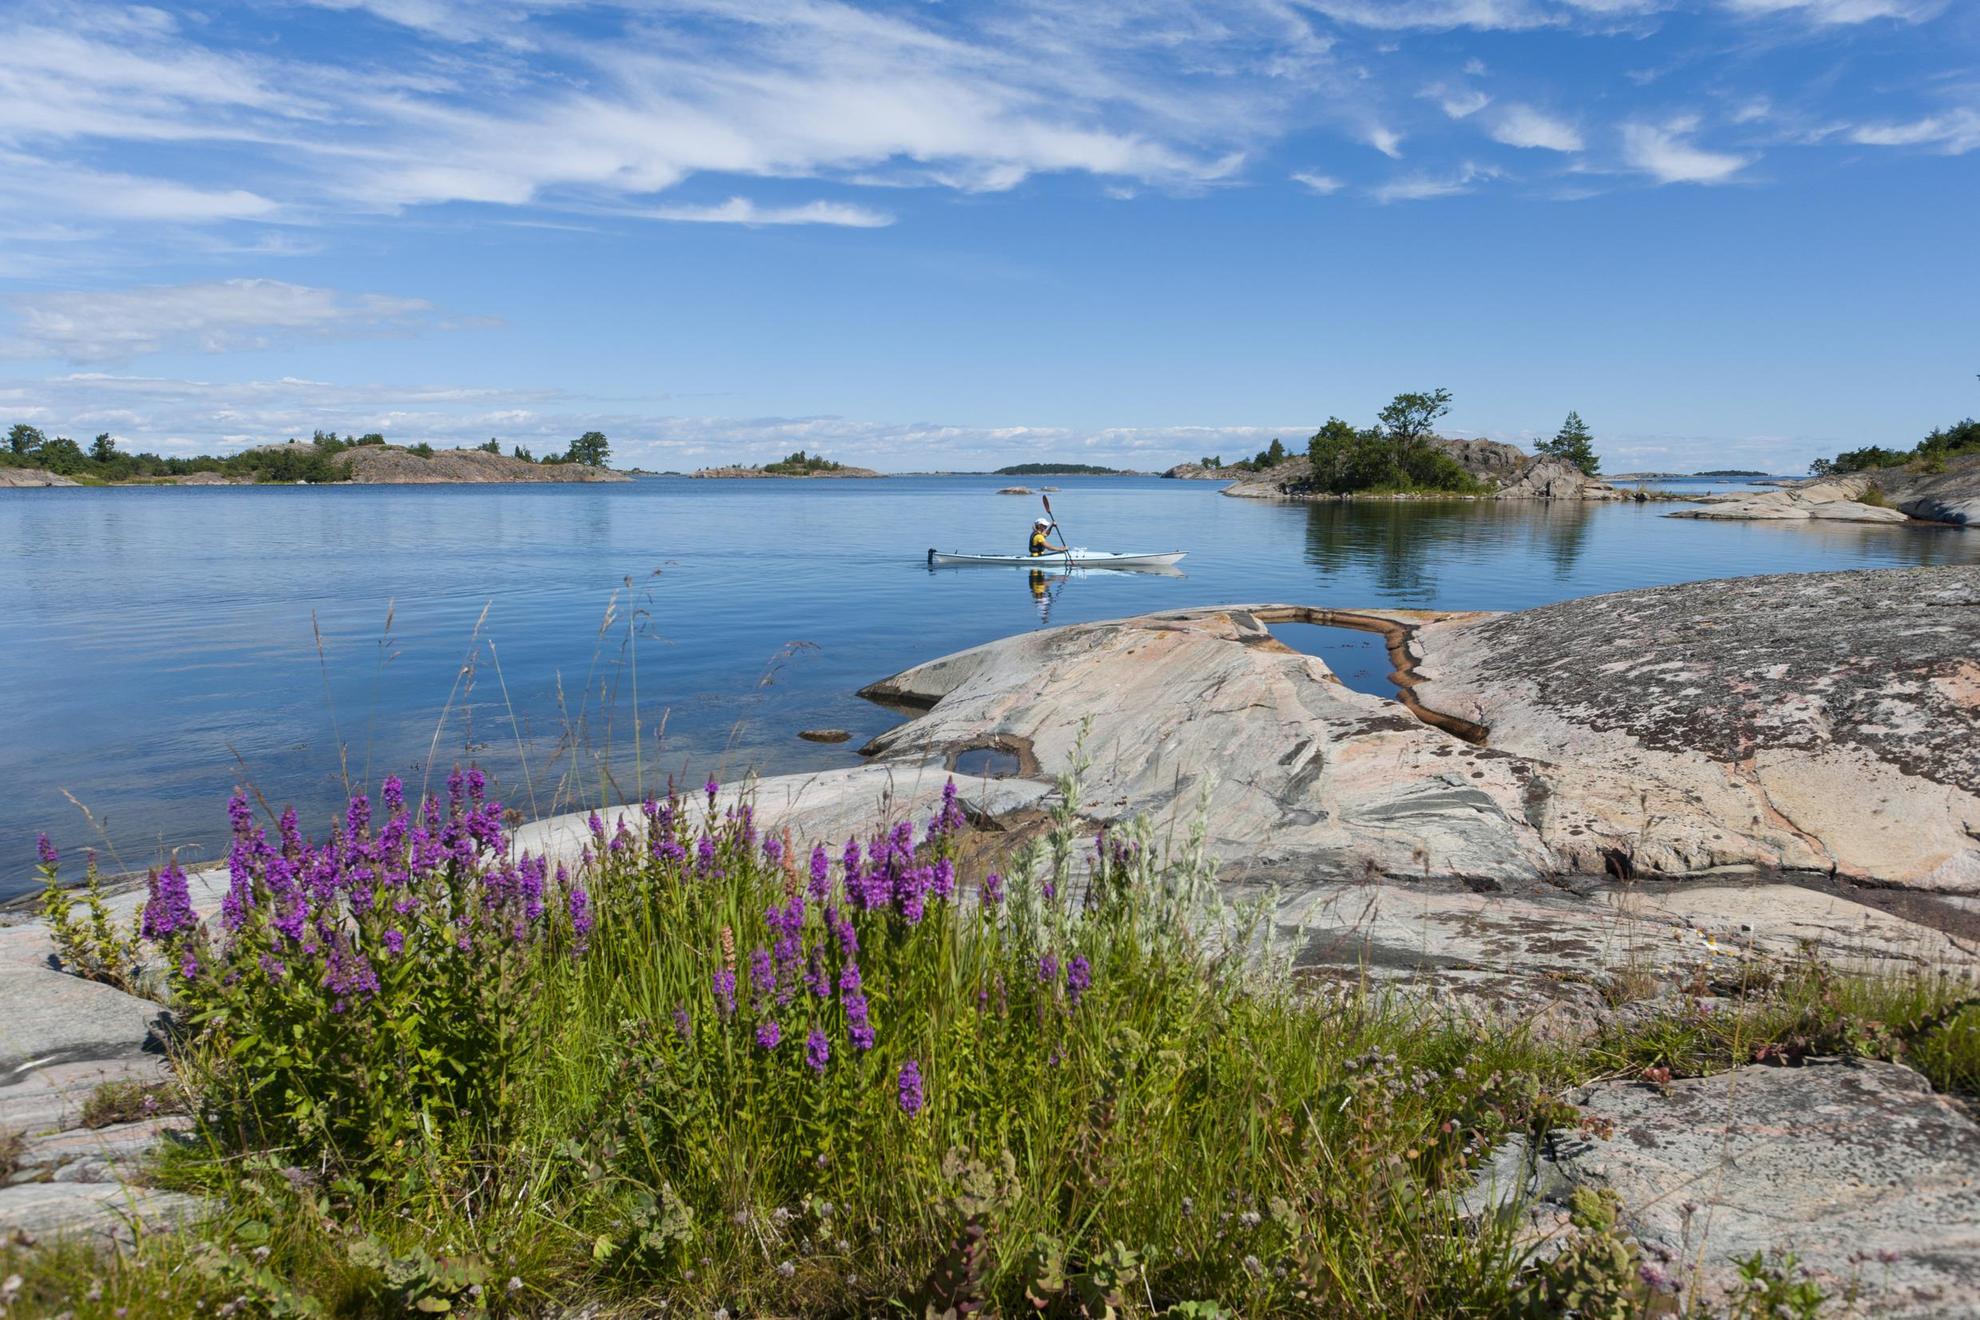 Kayaking in the Stockholm archipelago